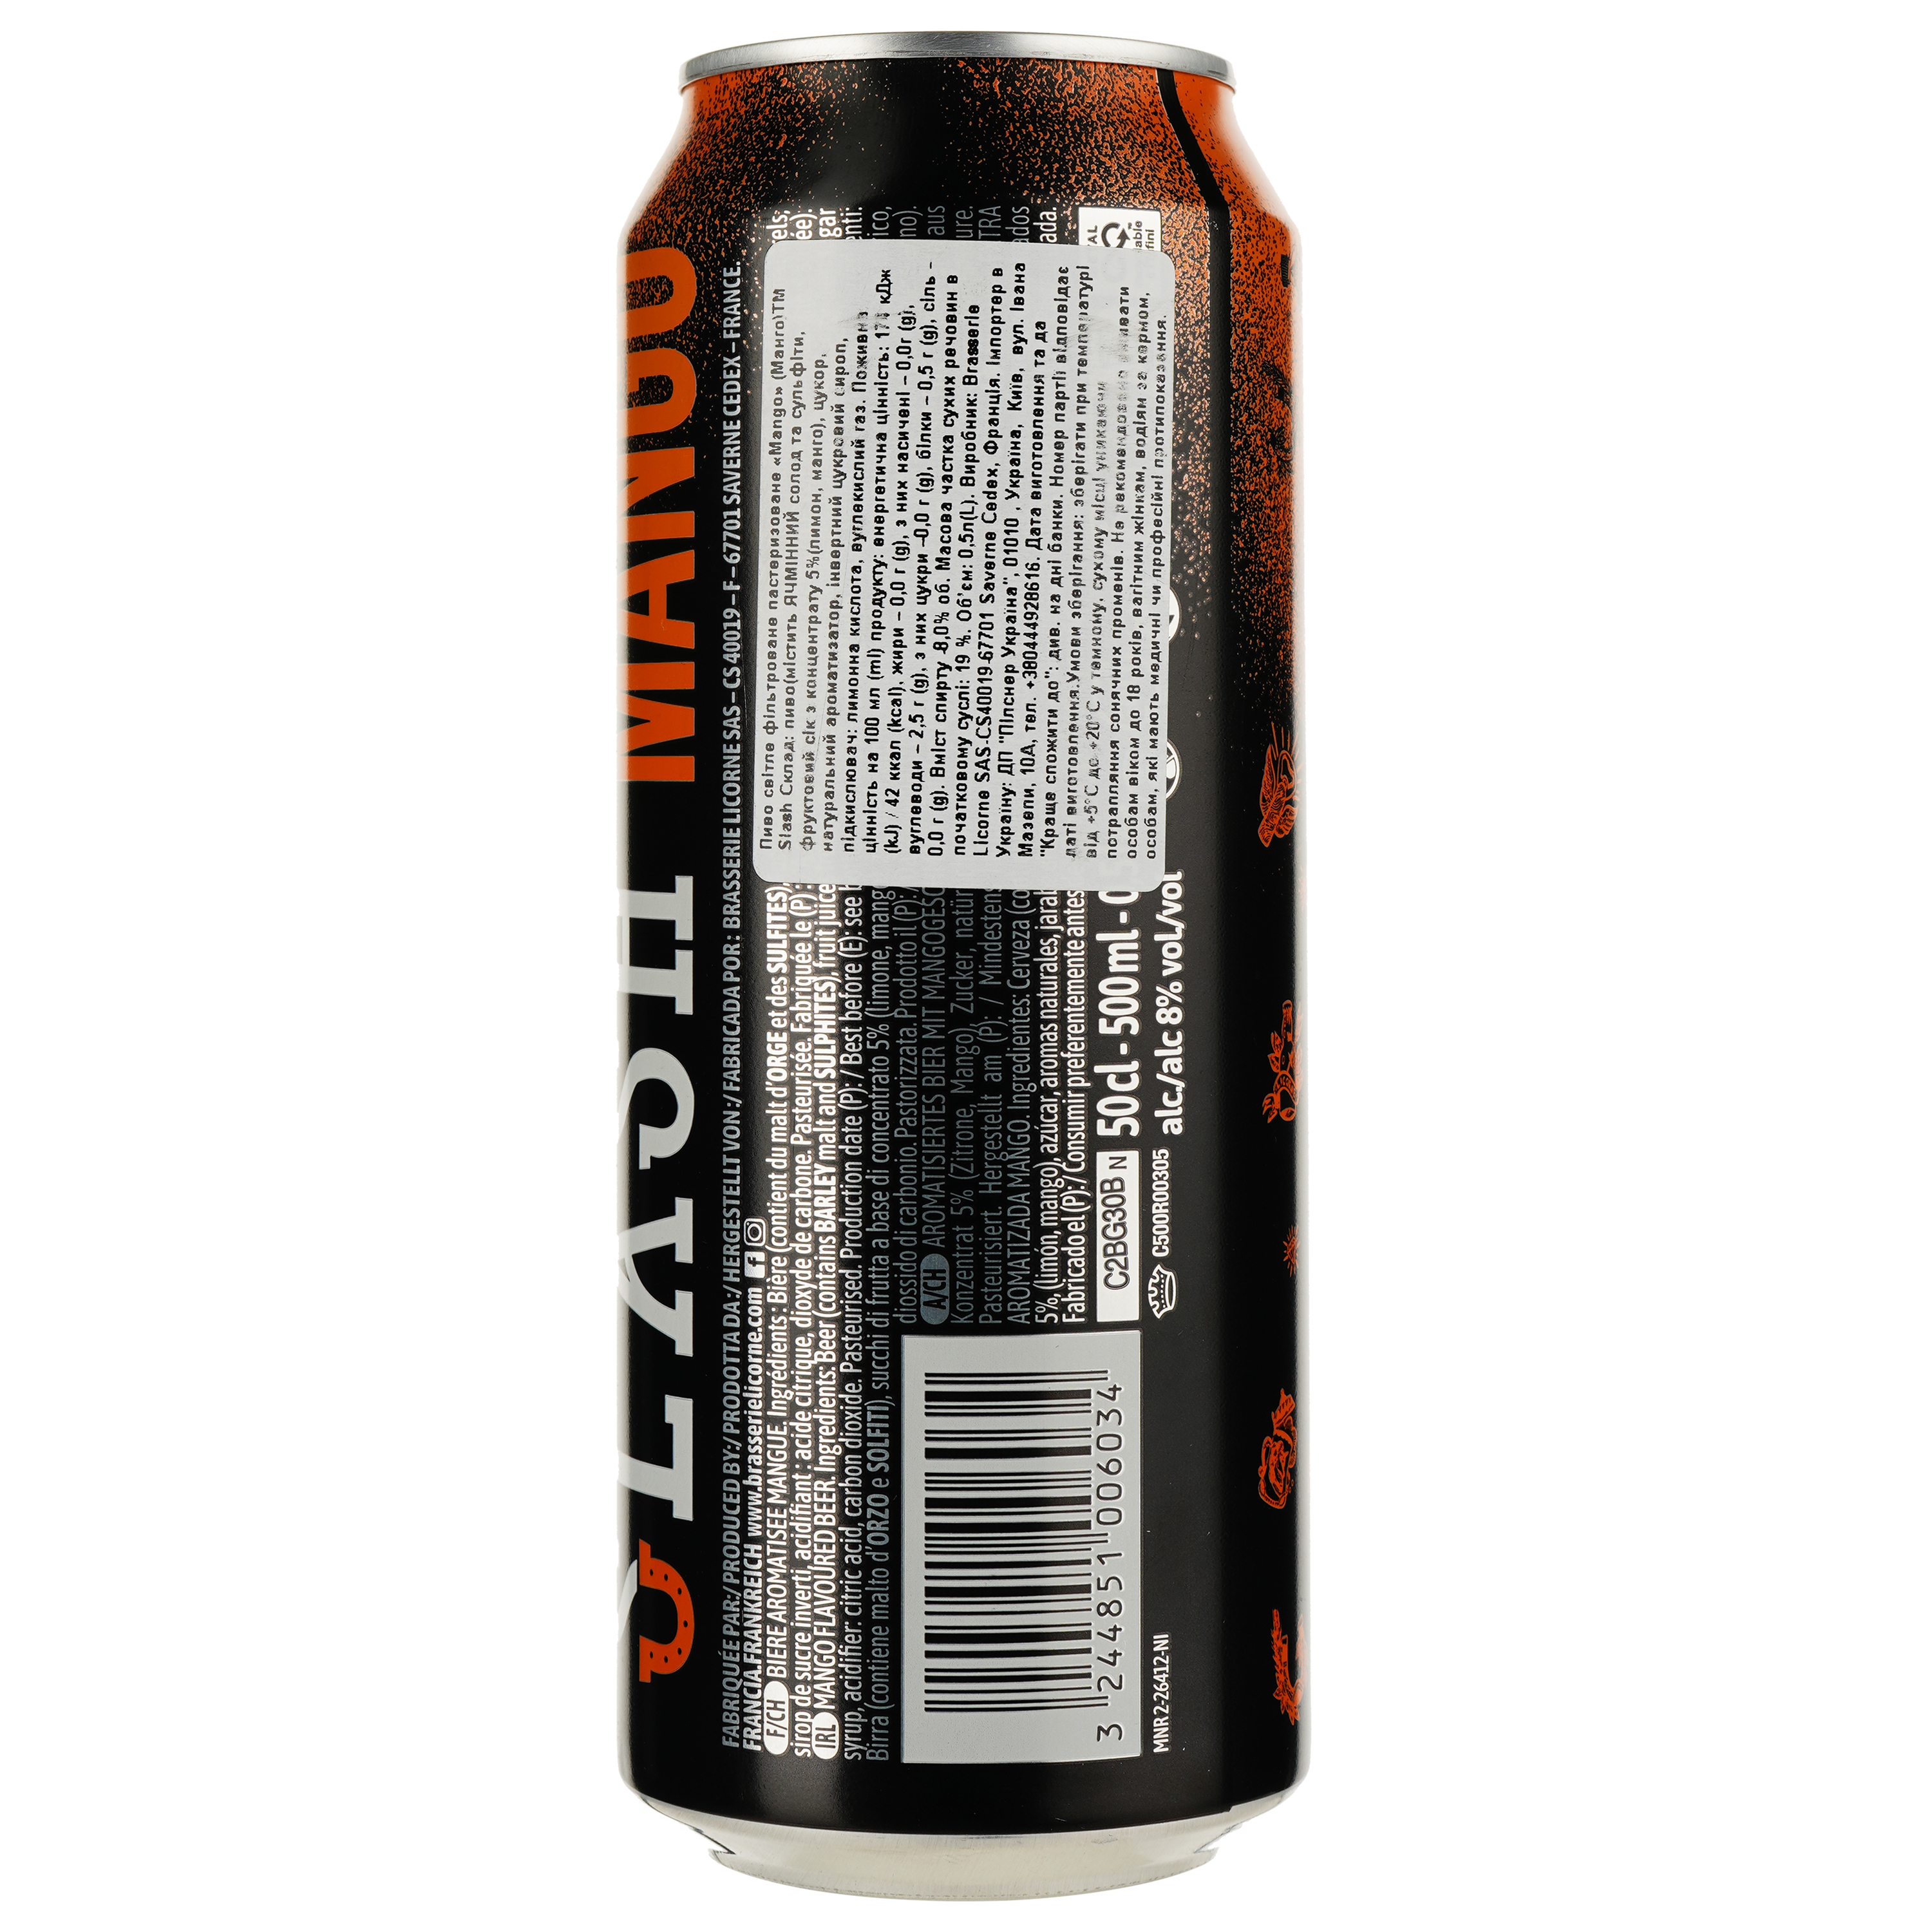 Пиво Slash Mango светлое 8% 0.5 л ж/б - фото 2